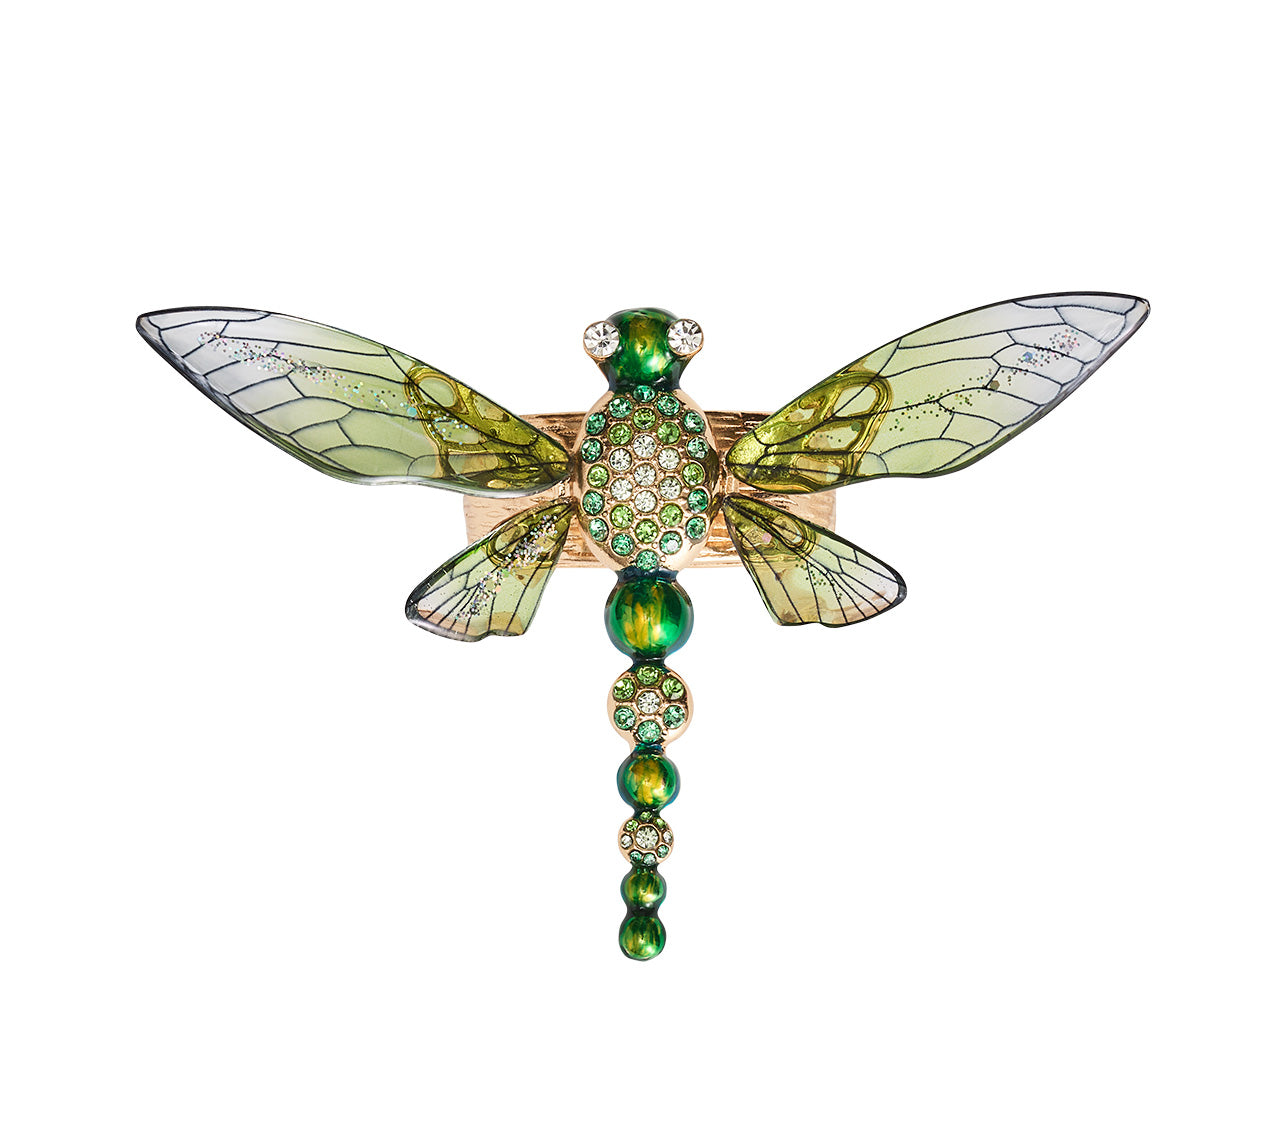 Kim Seybert Luxury Dragonfly Napkin Ring in Green in a Gift Box